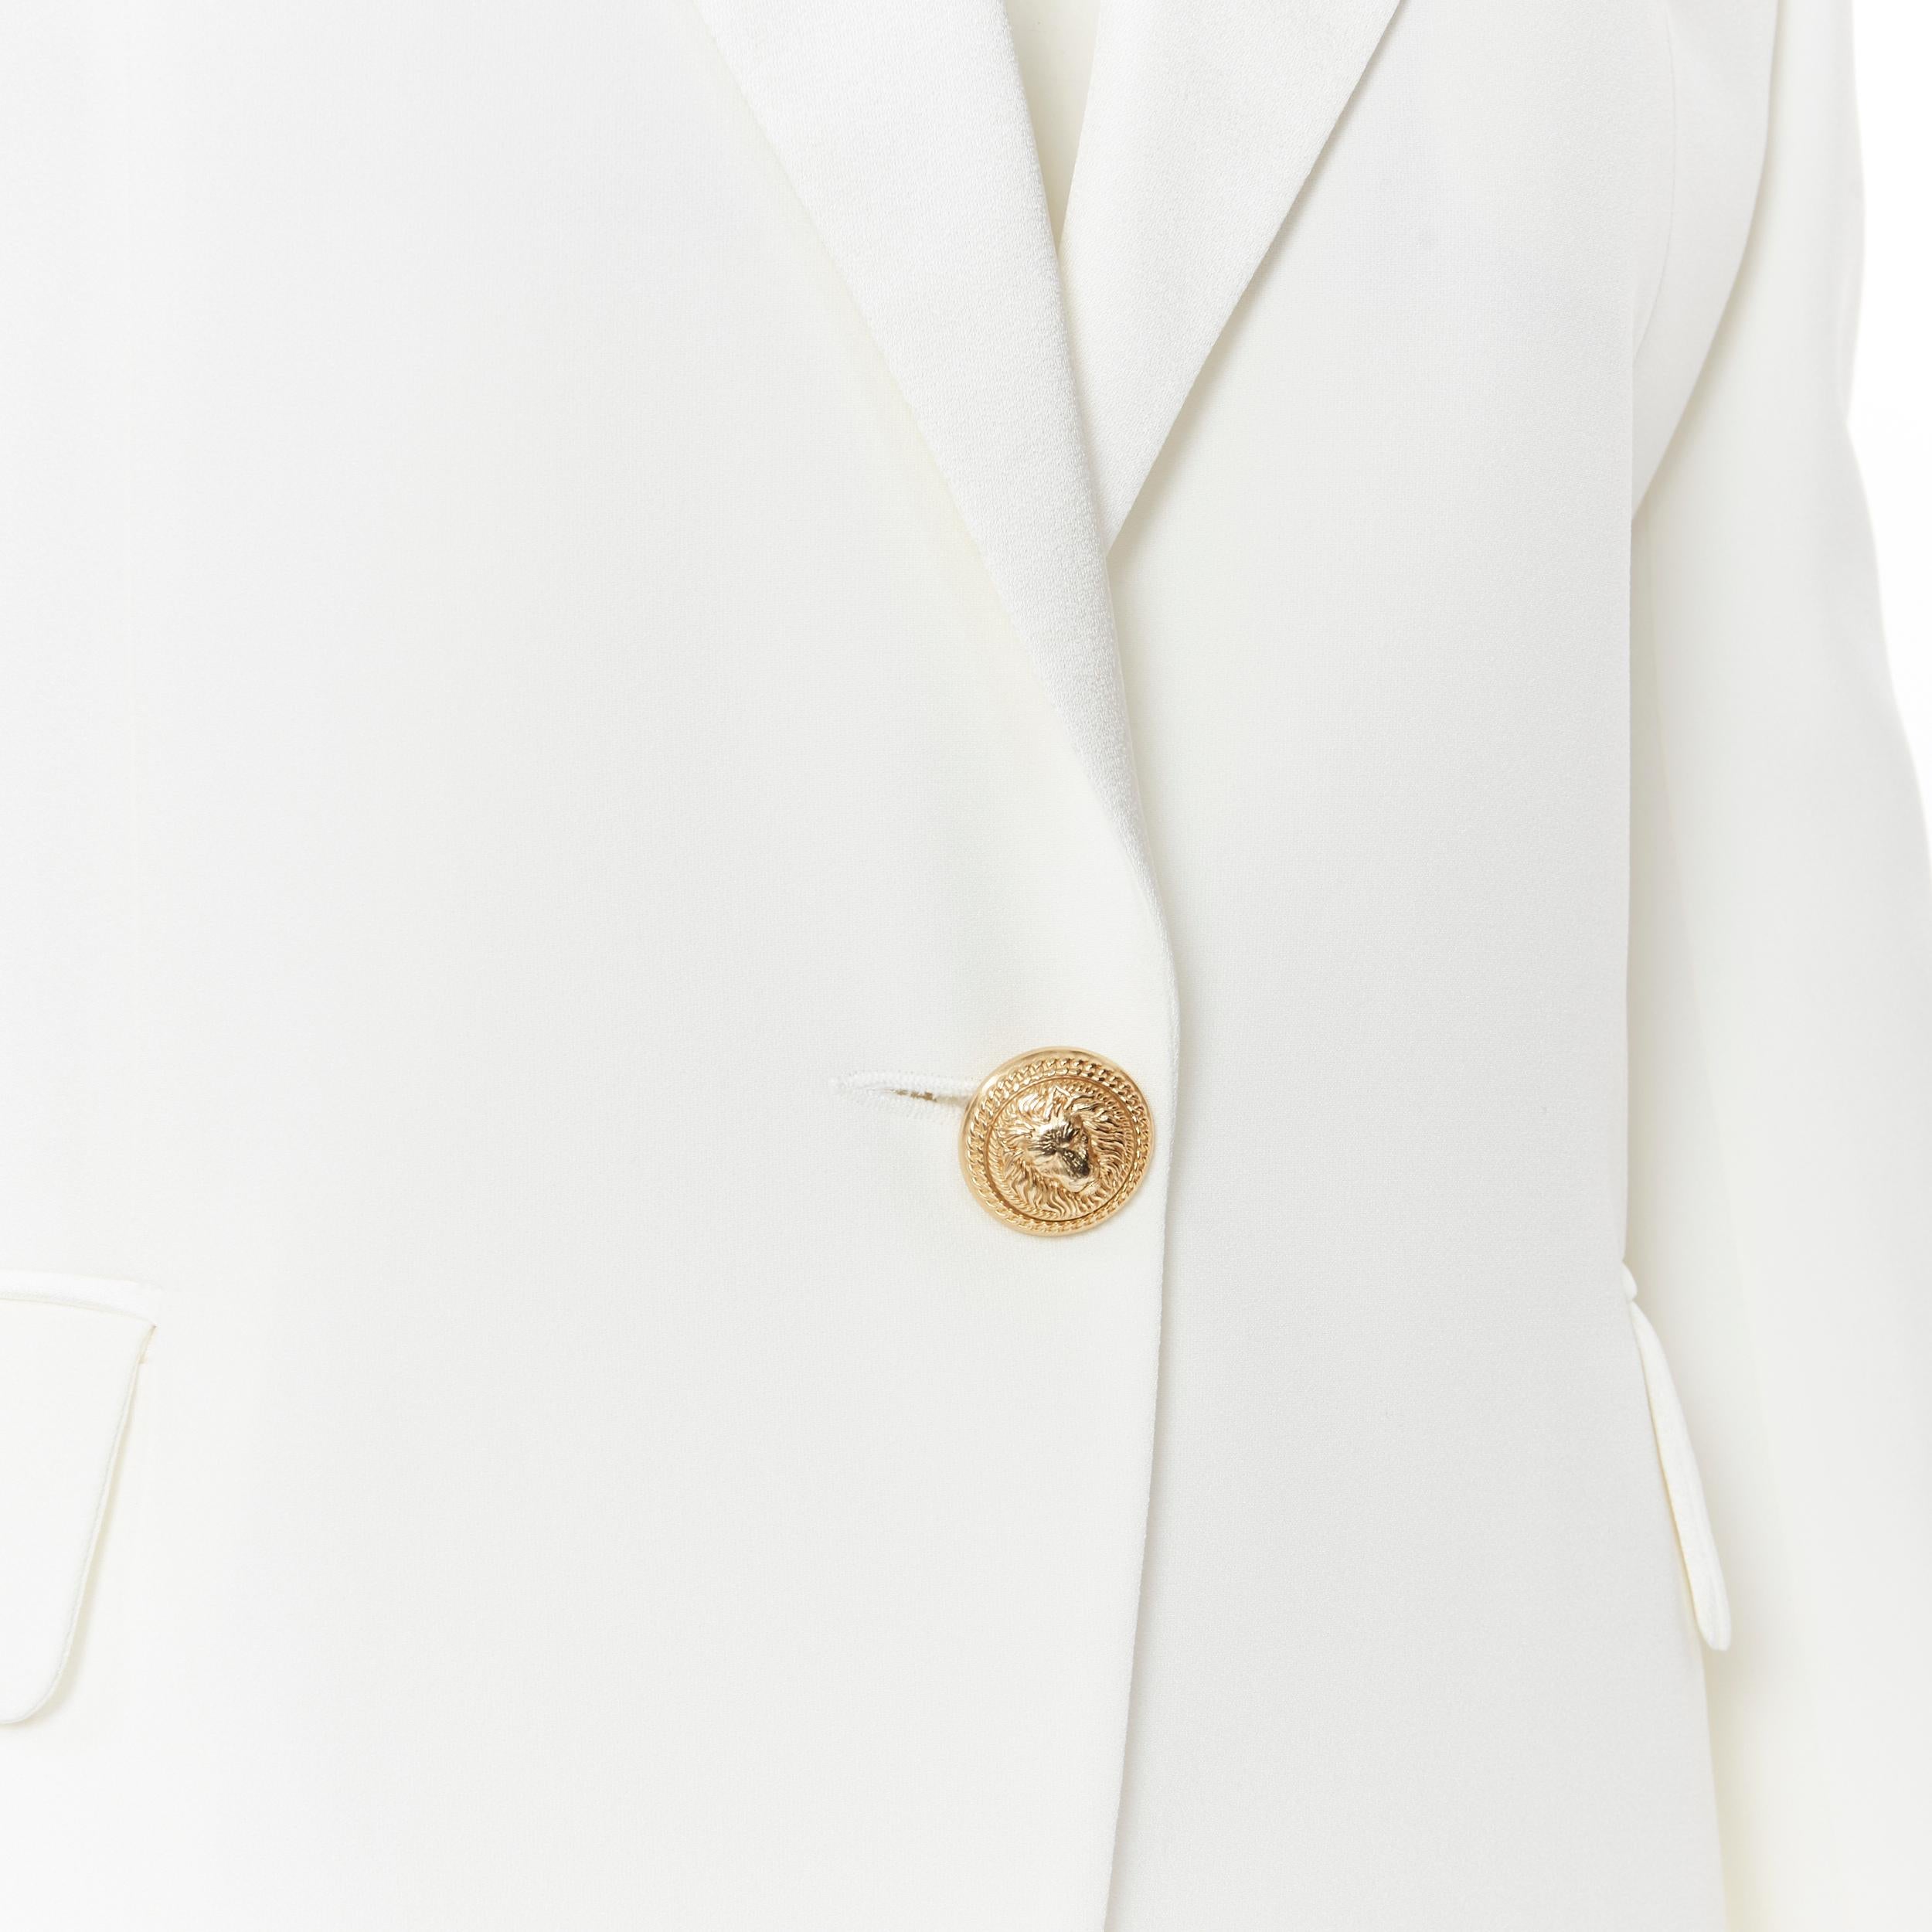 new BALMAIN white viscose military peak satin lapel military blazer jacket FR40
Brand: Balmain
Designer: Olivier Rousteing
Model Name / Style: Tuxedo jacket
Material: Viscose
Color: White
Pattern: Solid
Closure: Button
Extra Detail: BALMAIN style